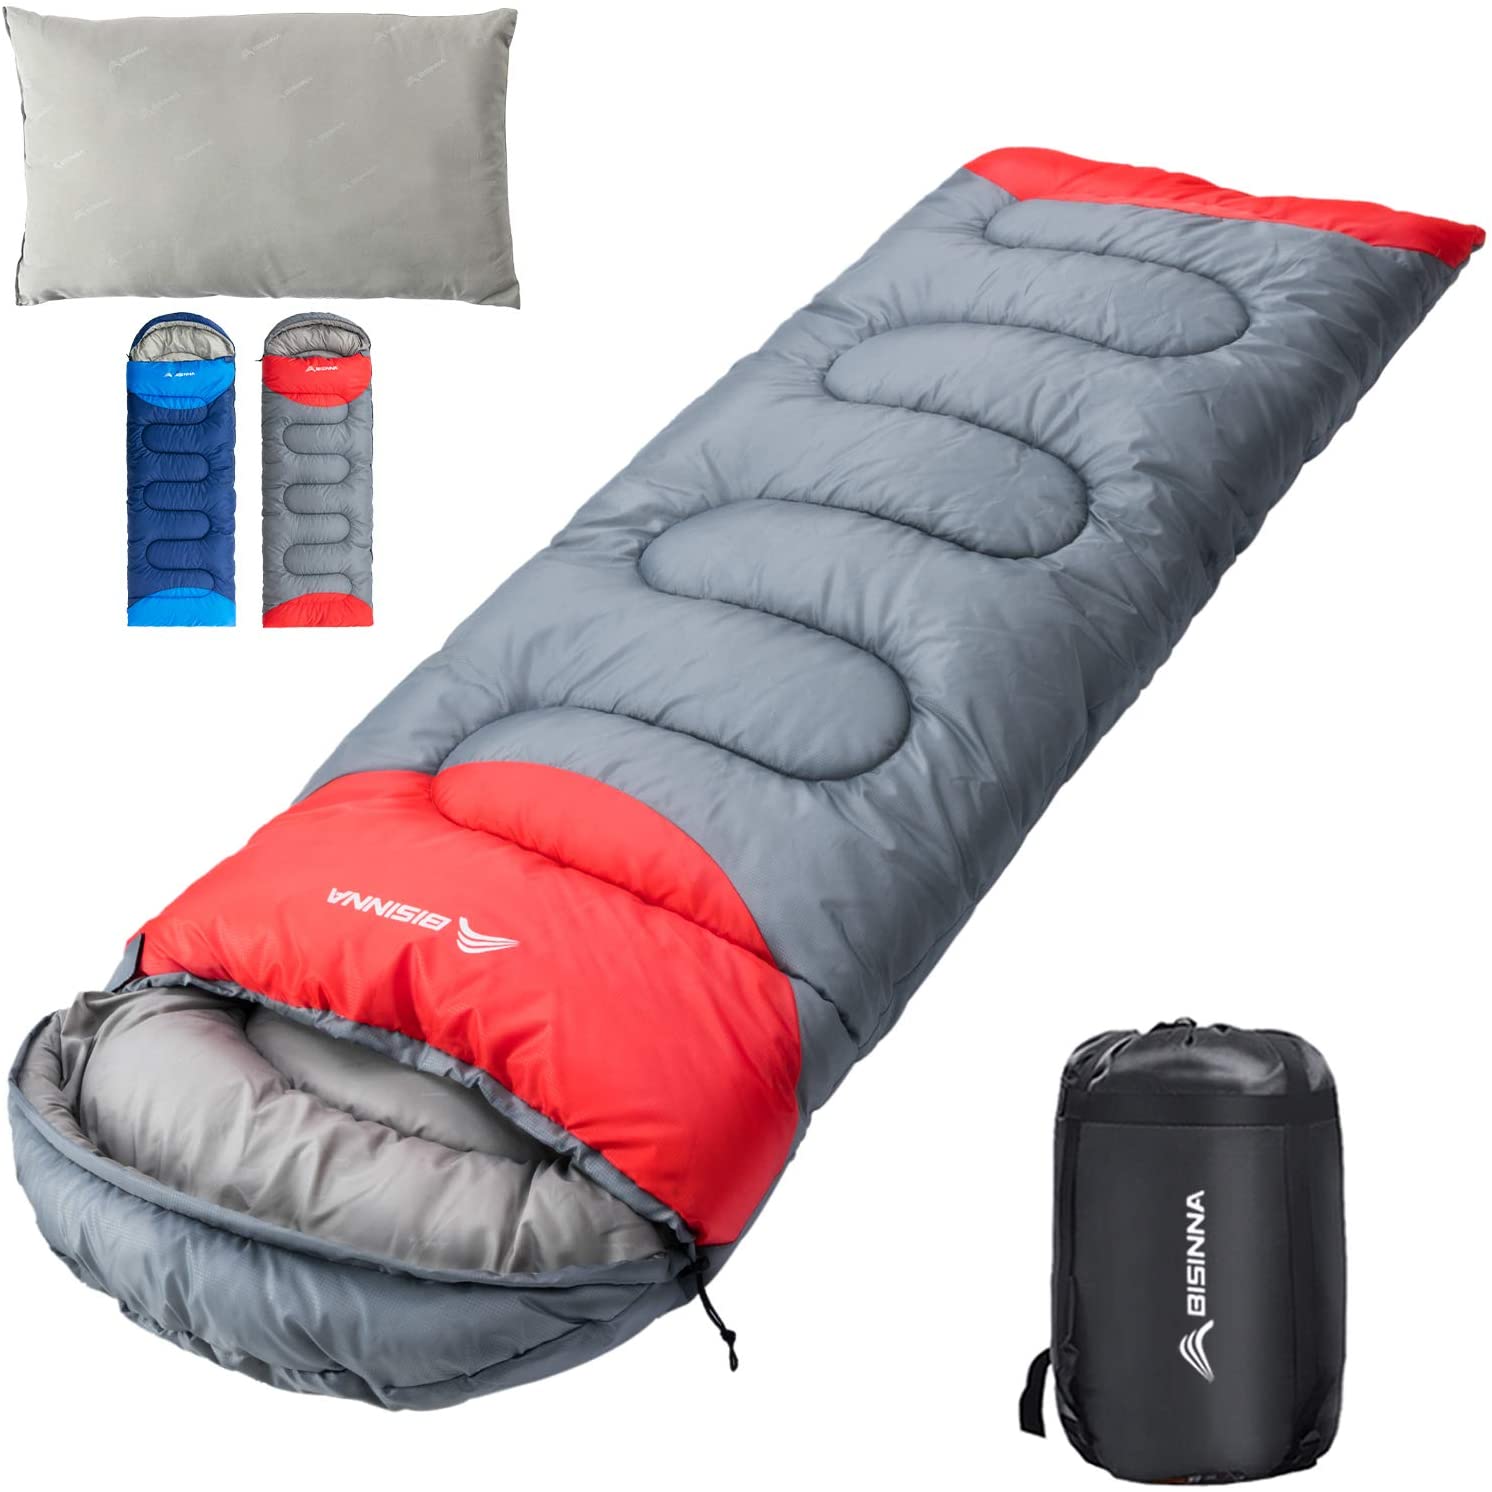 32℉/0℃ Extreme 3-4 Season Warm & Cool Weather Adult Sleeping Bags Large Lightweight Bessport Sleeping Bag Winter Waterproof for Camping Hiking Backpacking